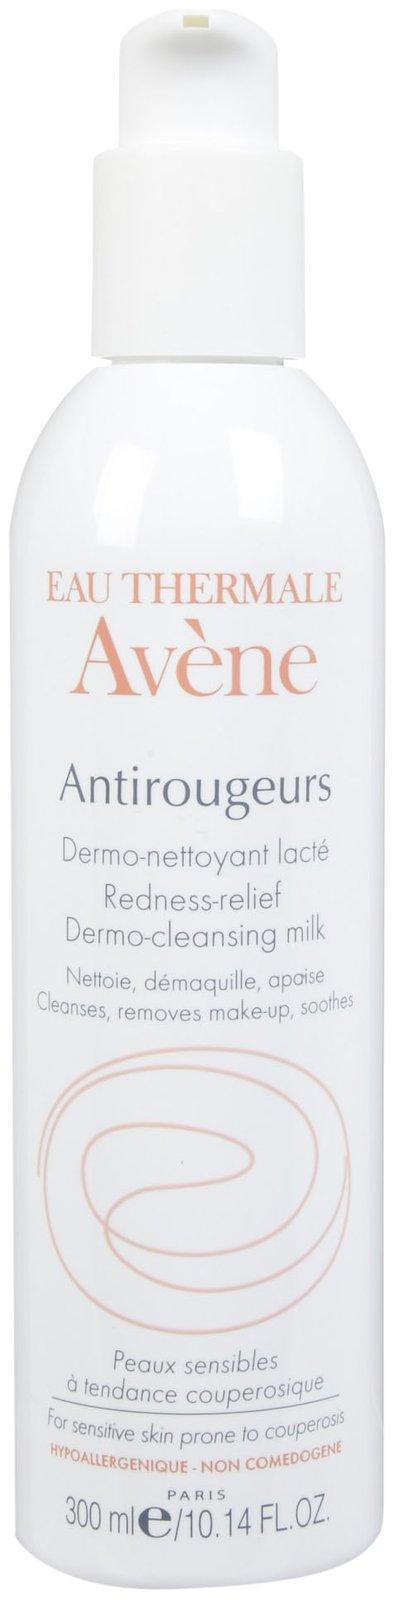 Avene Antirougeurs Dermo-cleansing Fluid